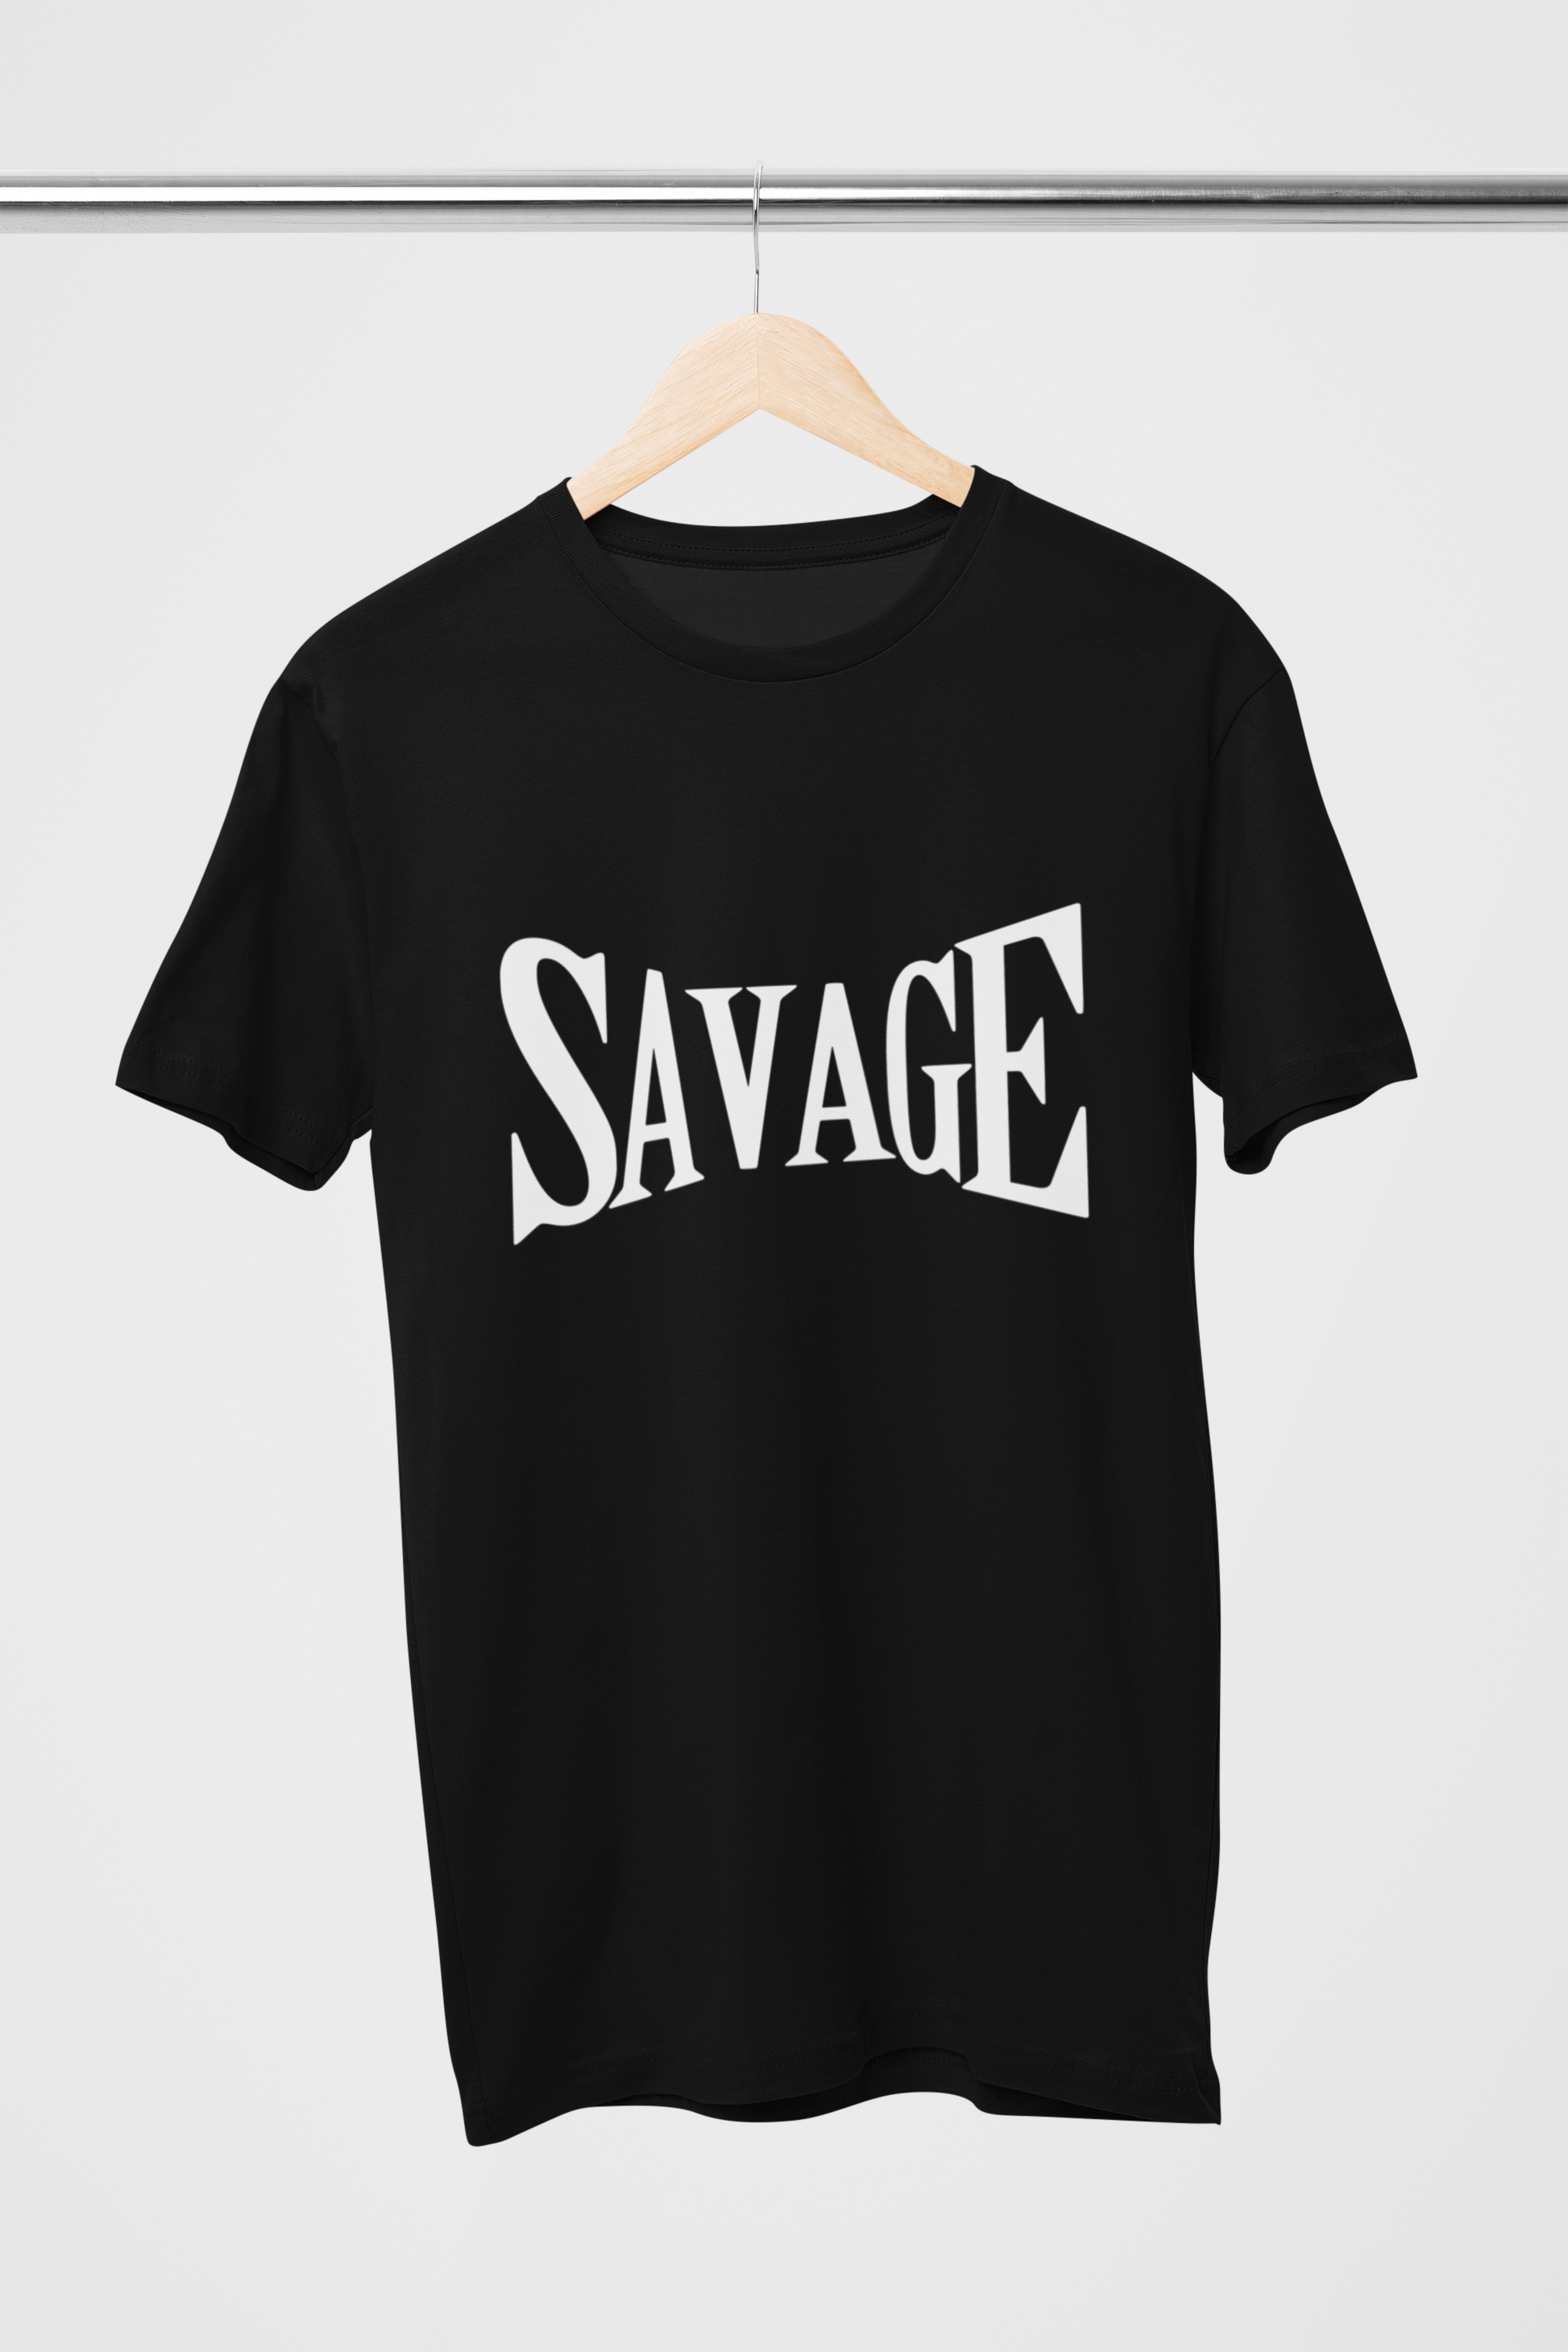 Savage Black Pure Cotton T-Shirt For Men | Tarun Kapoor Collection